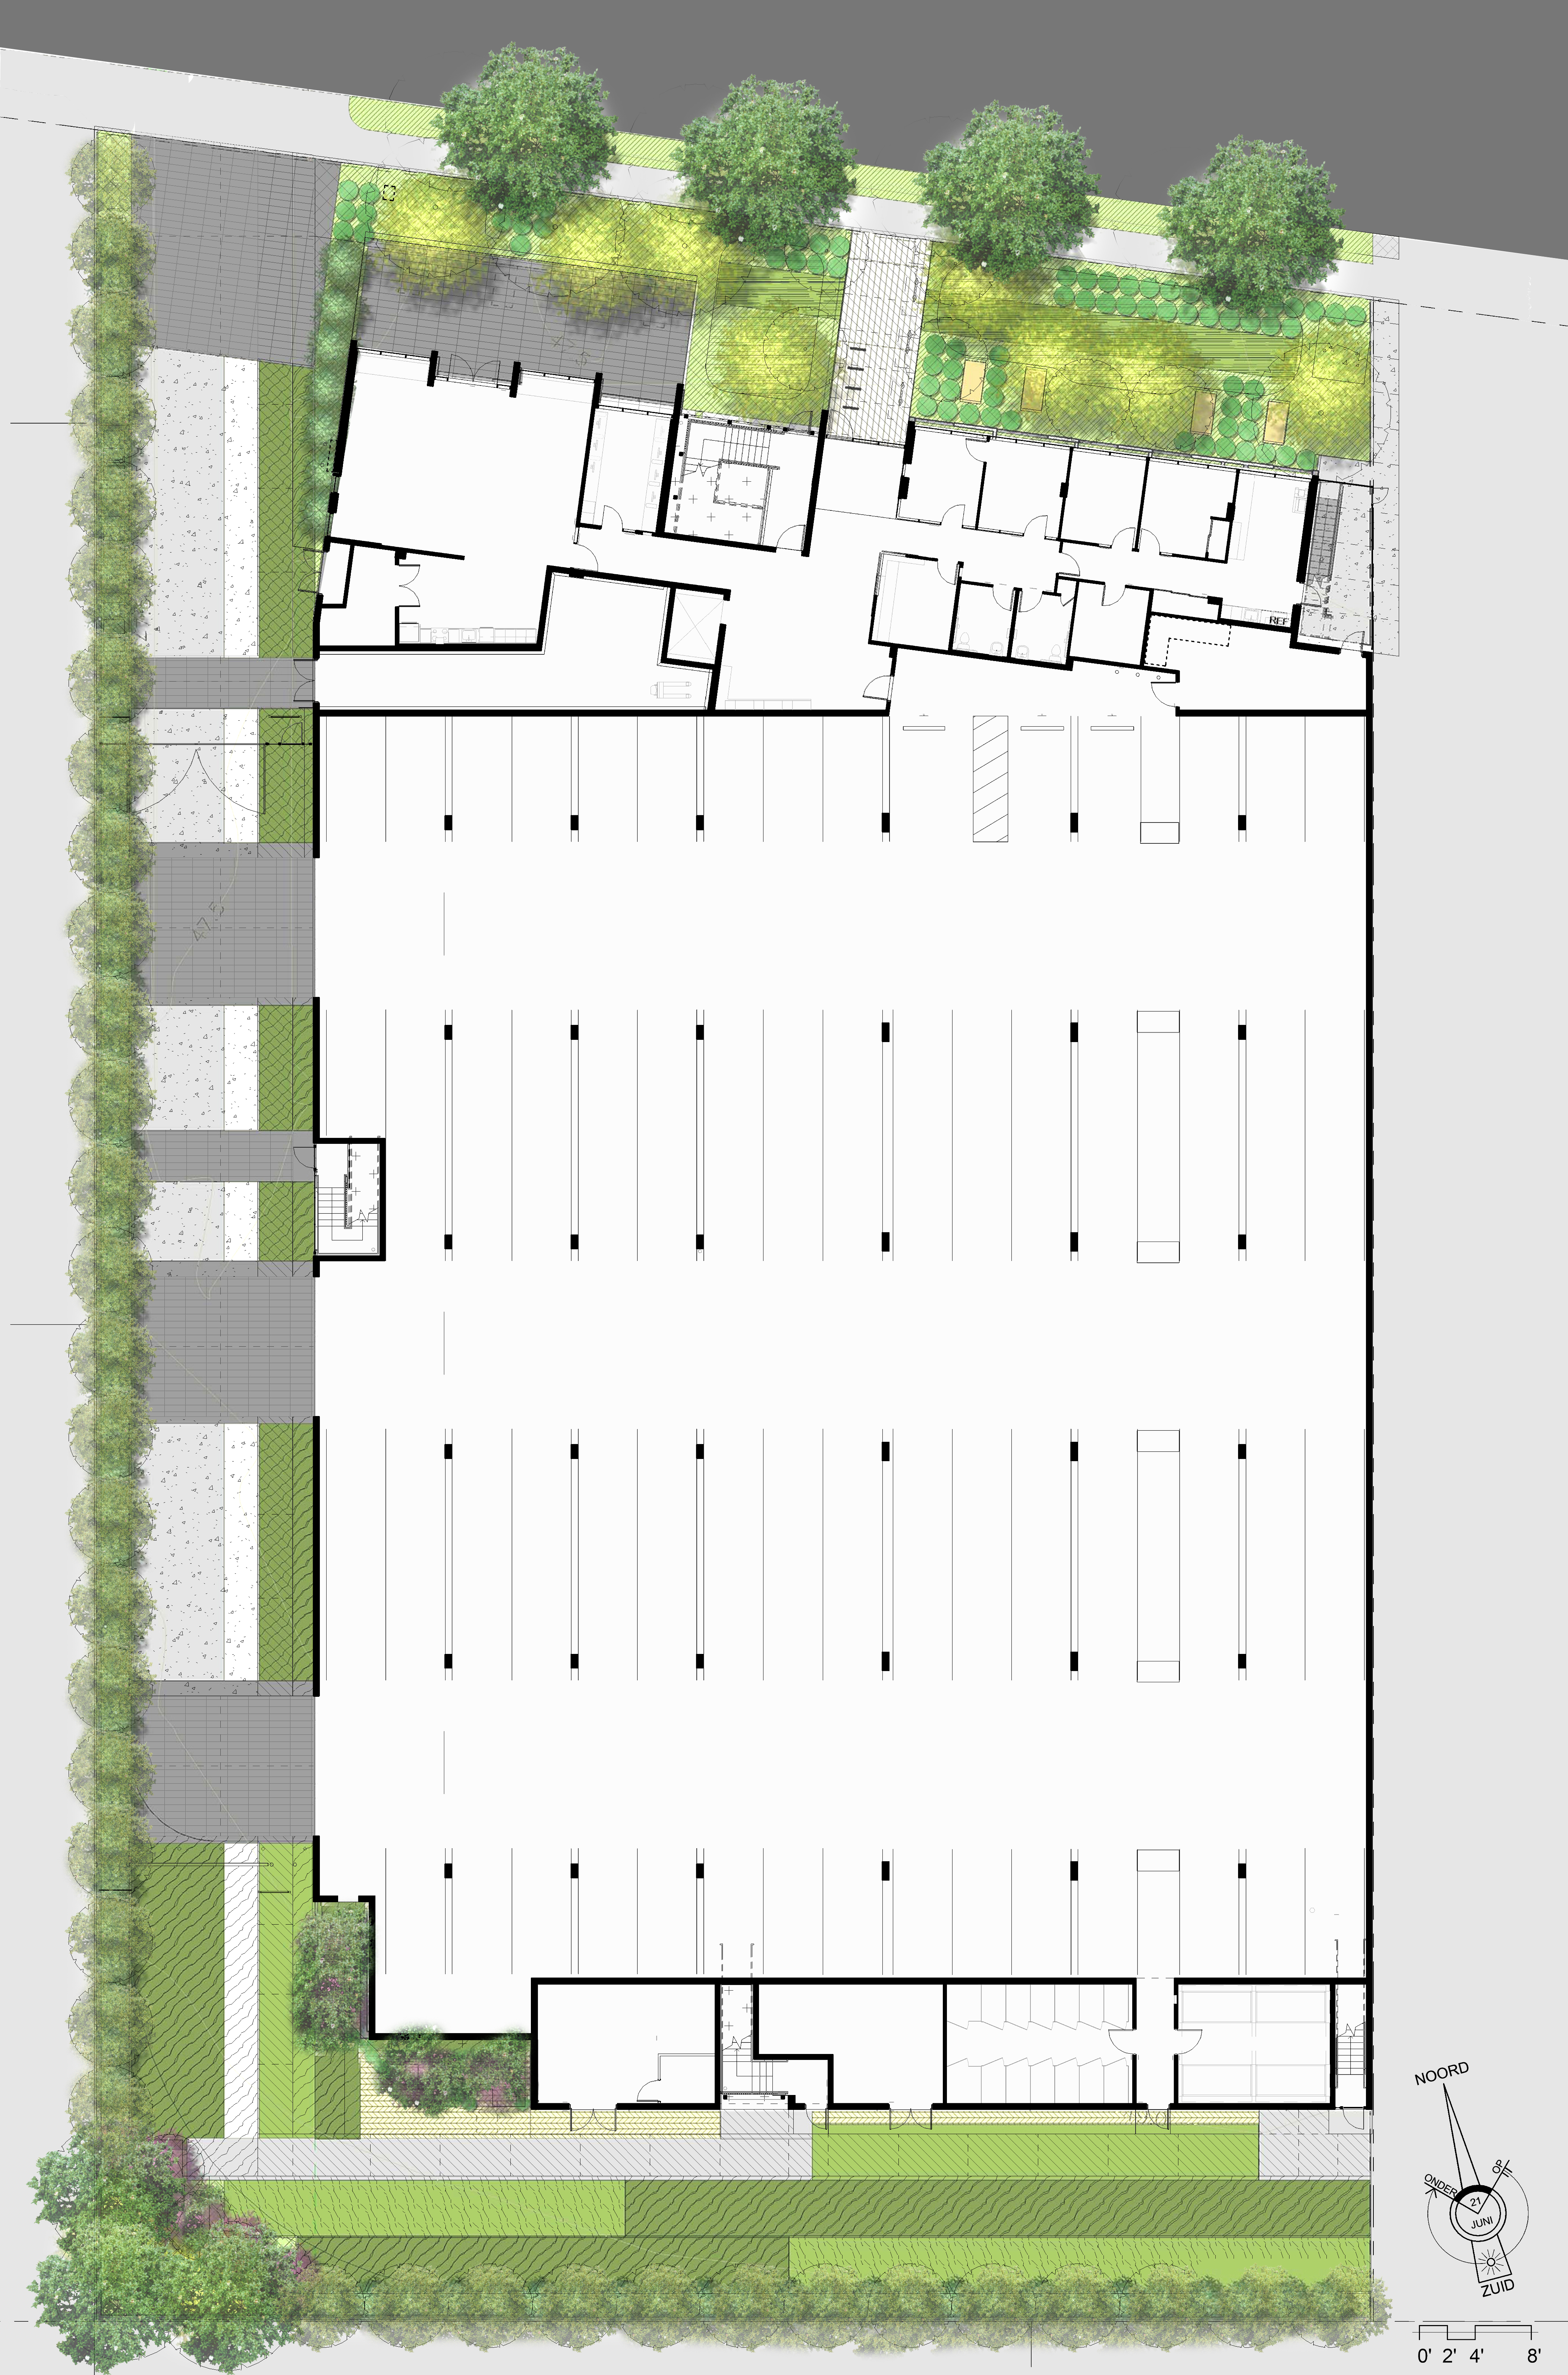 Ground level site plan of Onizuka Crossing Family Housing in Sunnyvale, California.